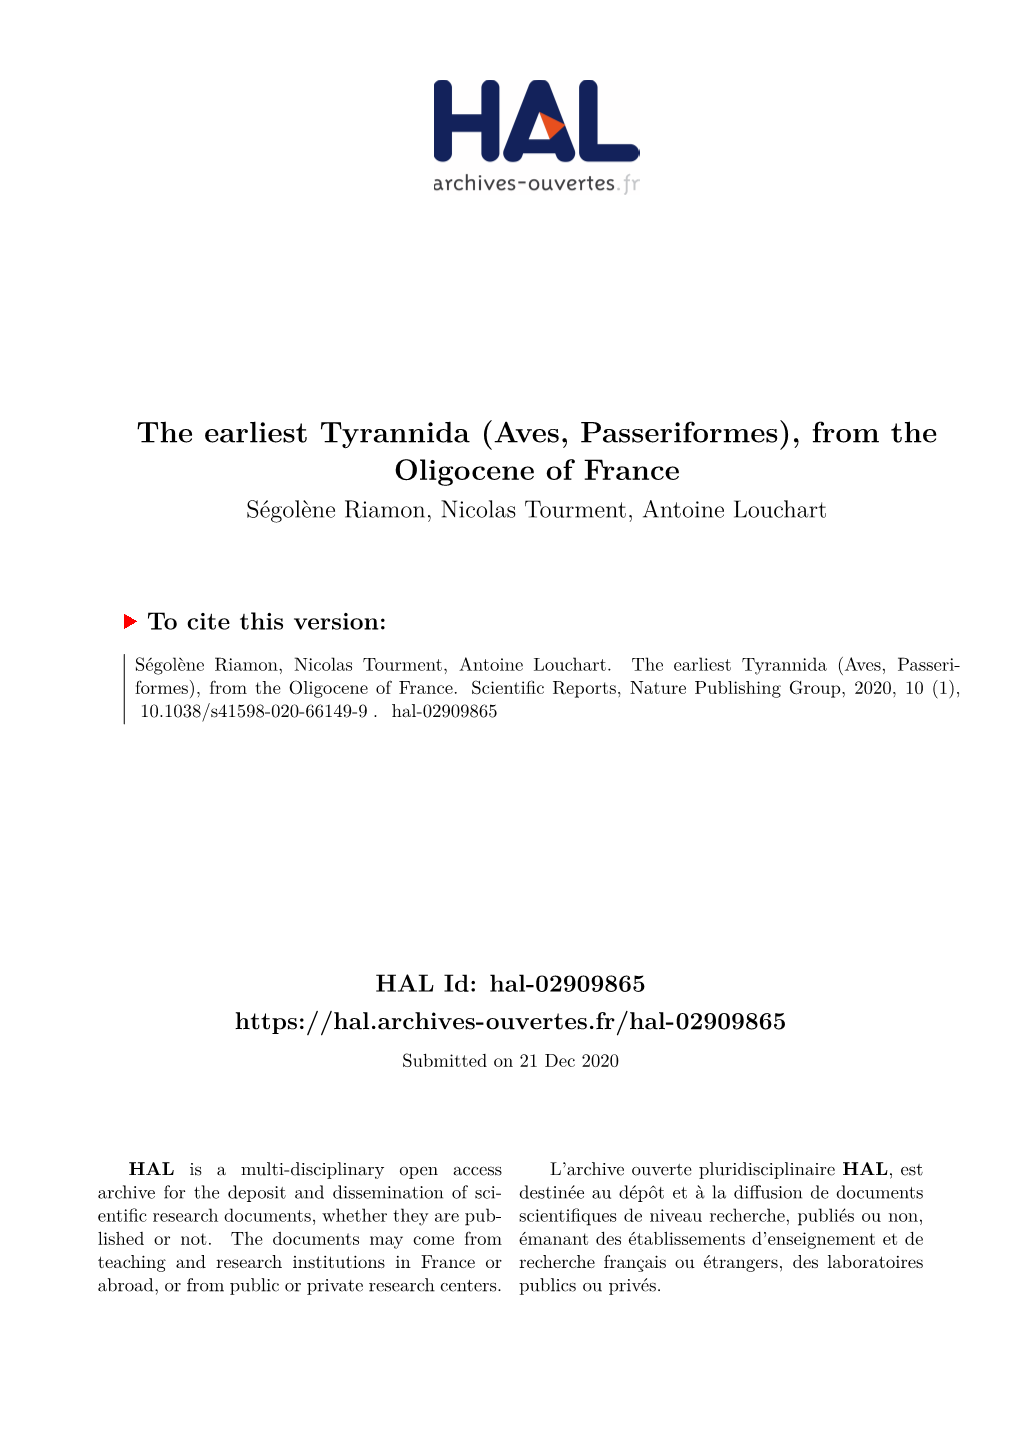 The Earliest Tyrannida (Aves, Passeriformes), from the Oligocene of France Ségolène Riamon, Nicolas Tourment, Antoine Louchart